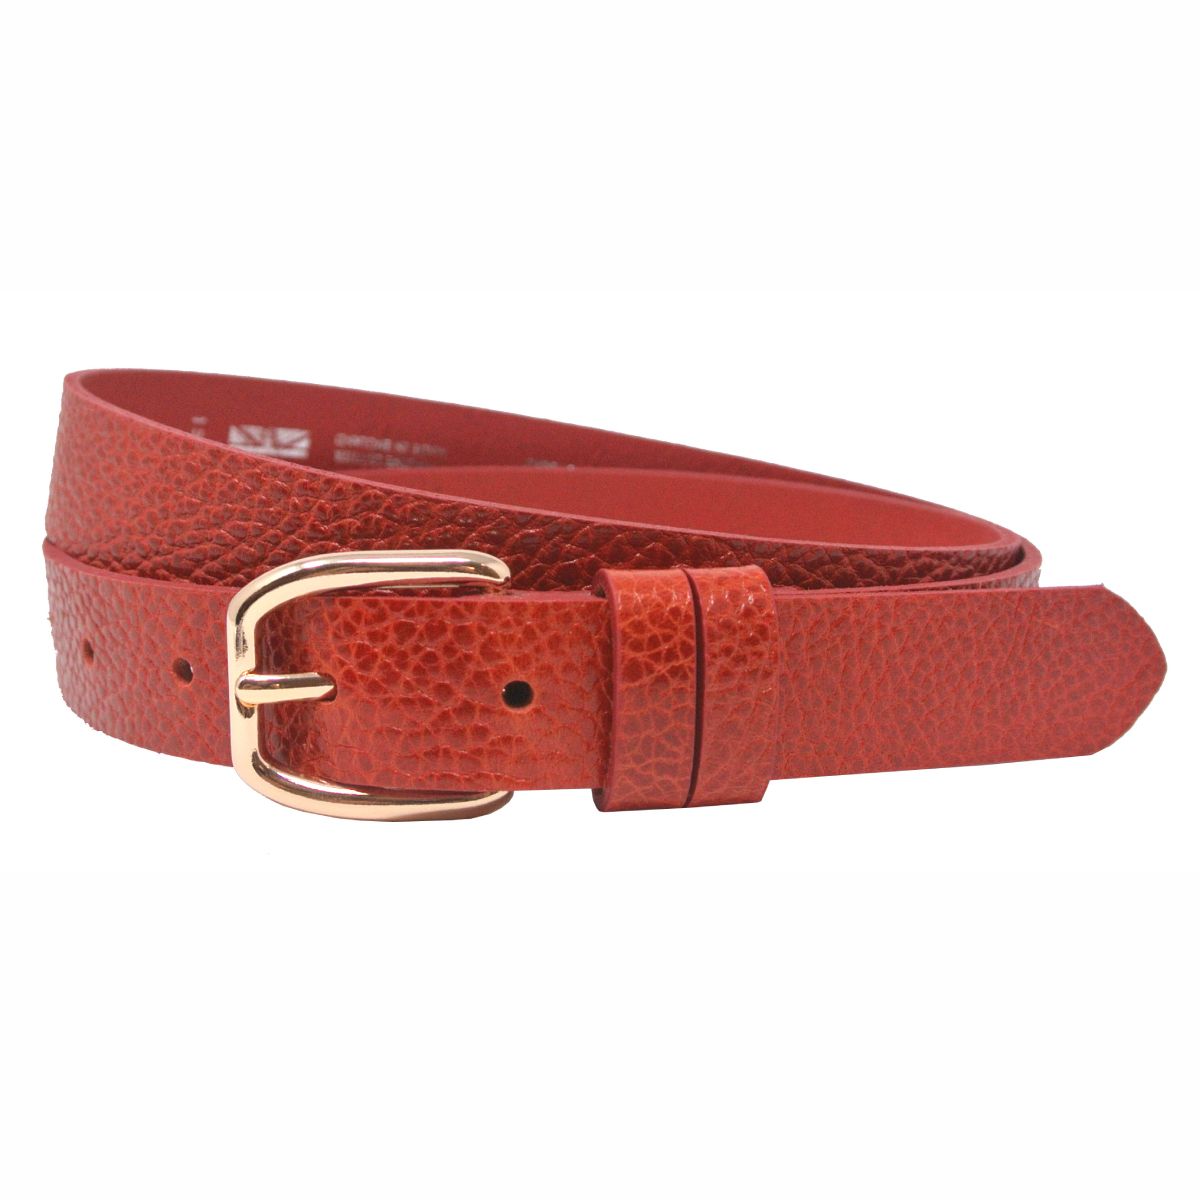 British Belt Company Ladies Tamsin 25mm Leather Jeans belt - Pediwear ...